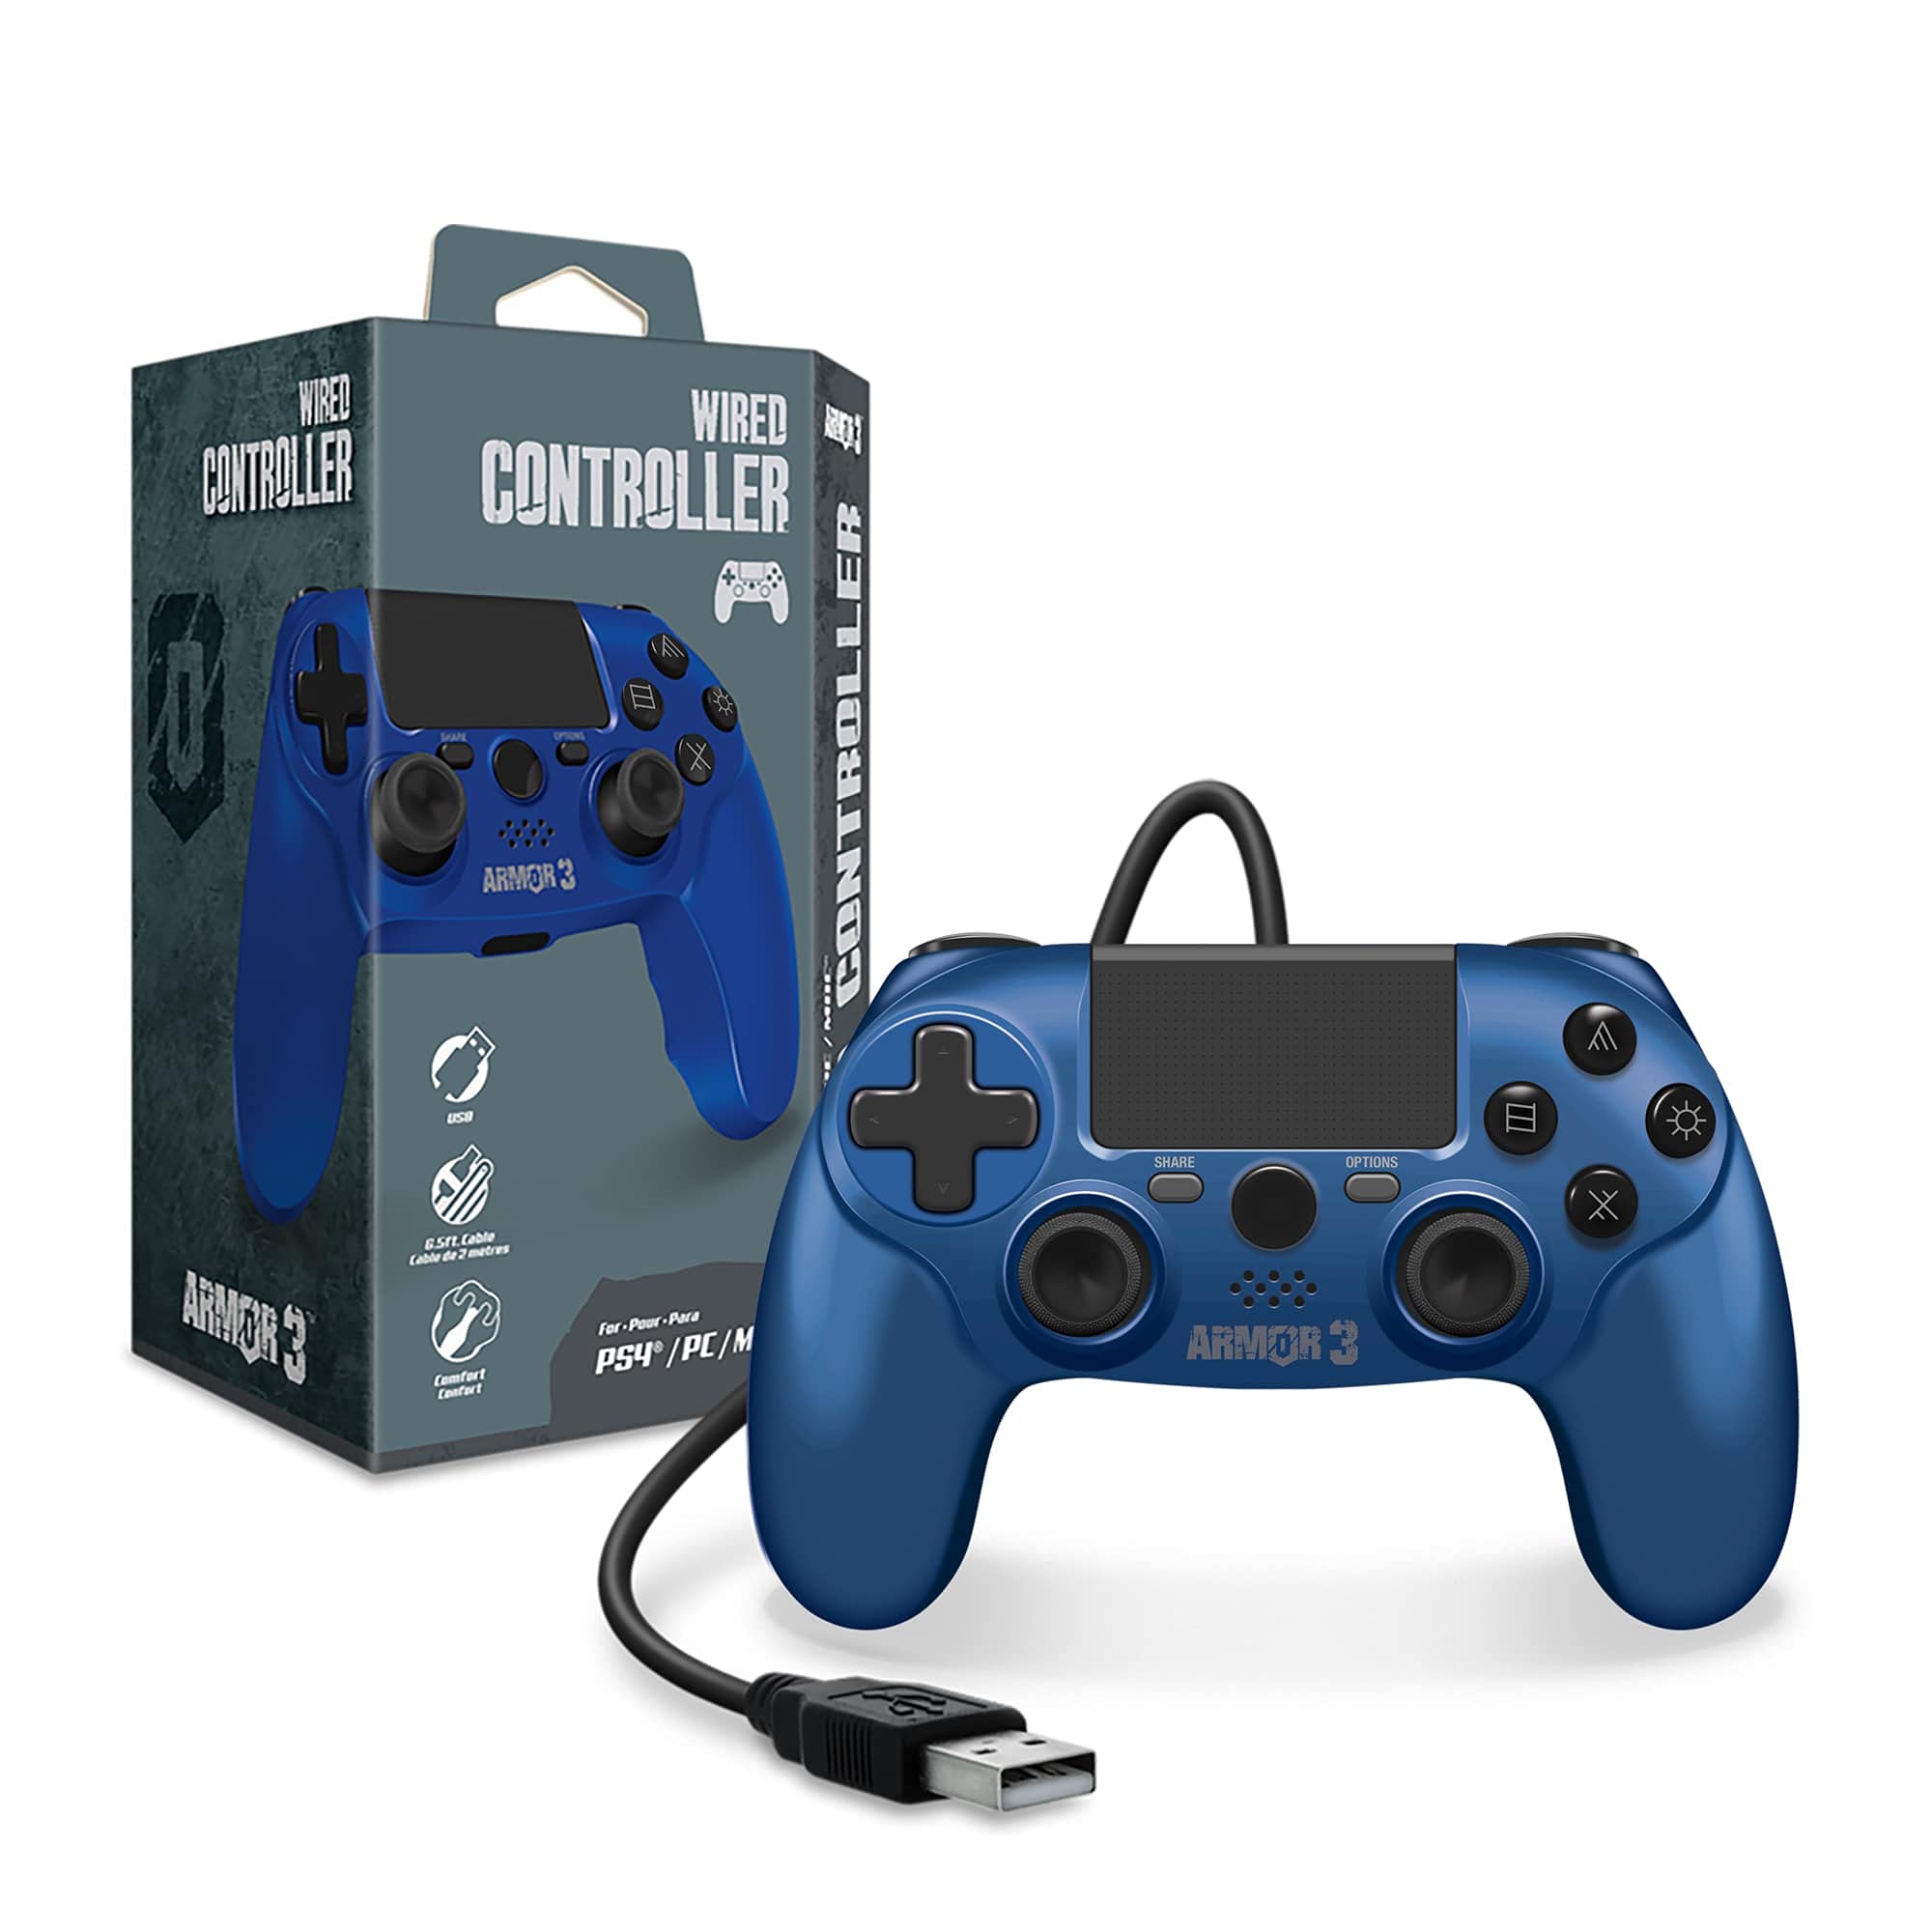 Armor3 有線ゲームコントローラ PS4 / PC / MAC 対応 カラー/Blue USB接続